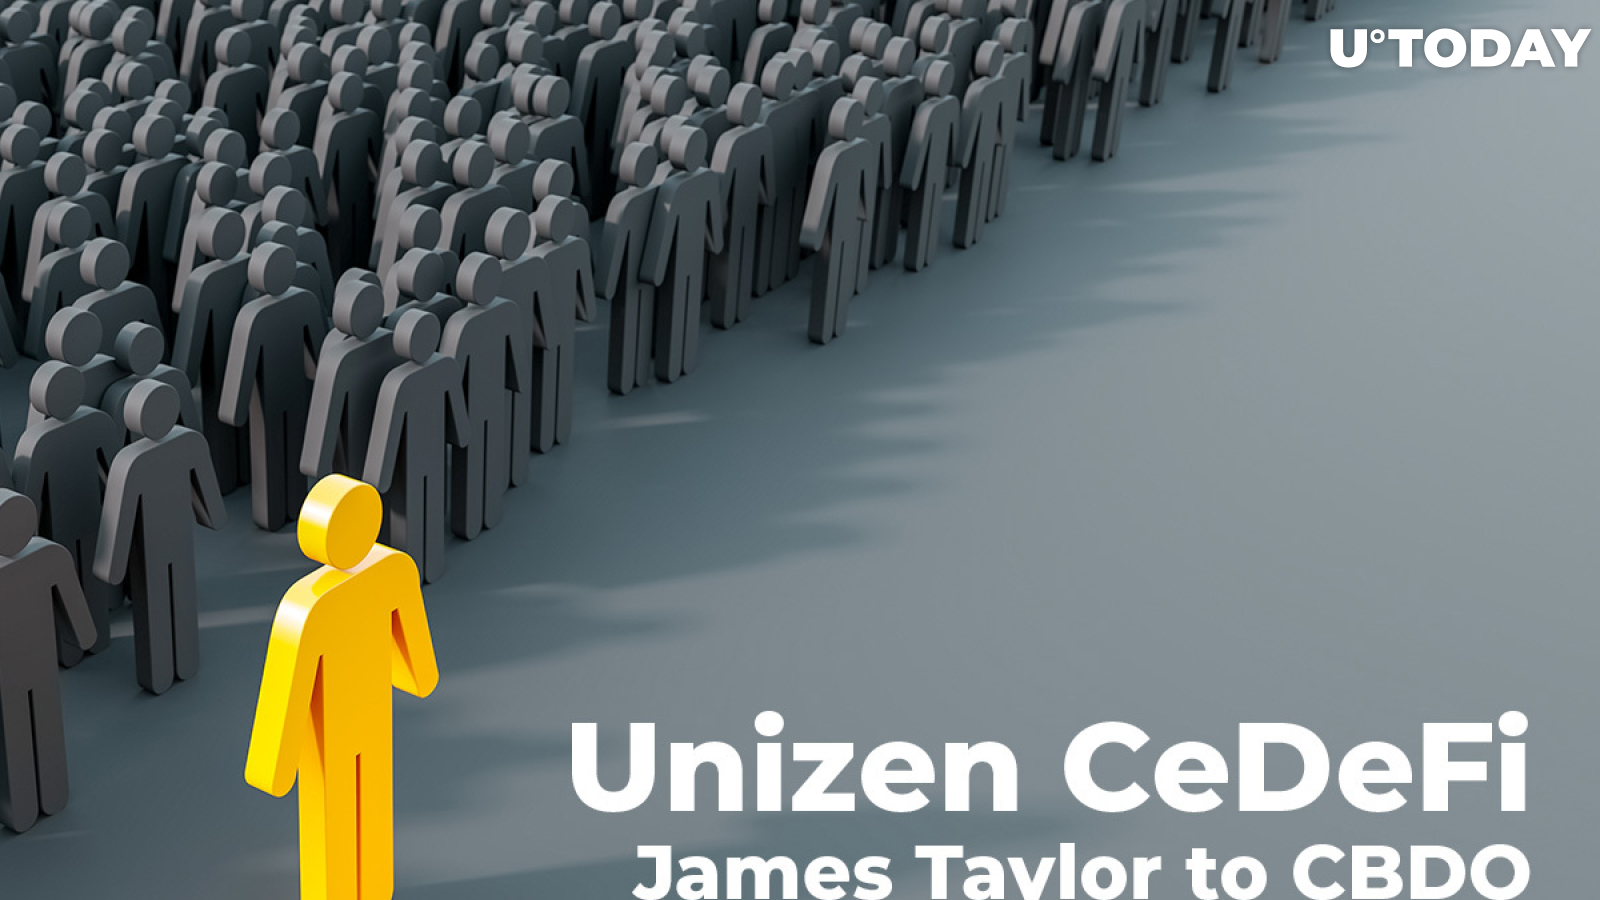 Unizen CeDeFi Appoints Ex-Bank of New York's James Taylor to CBDO Role